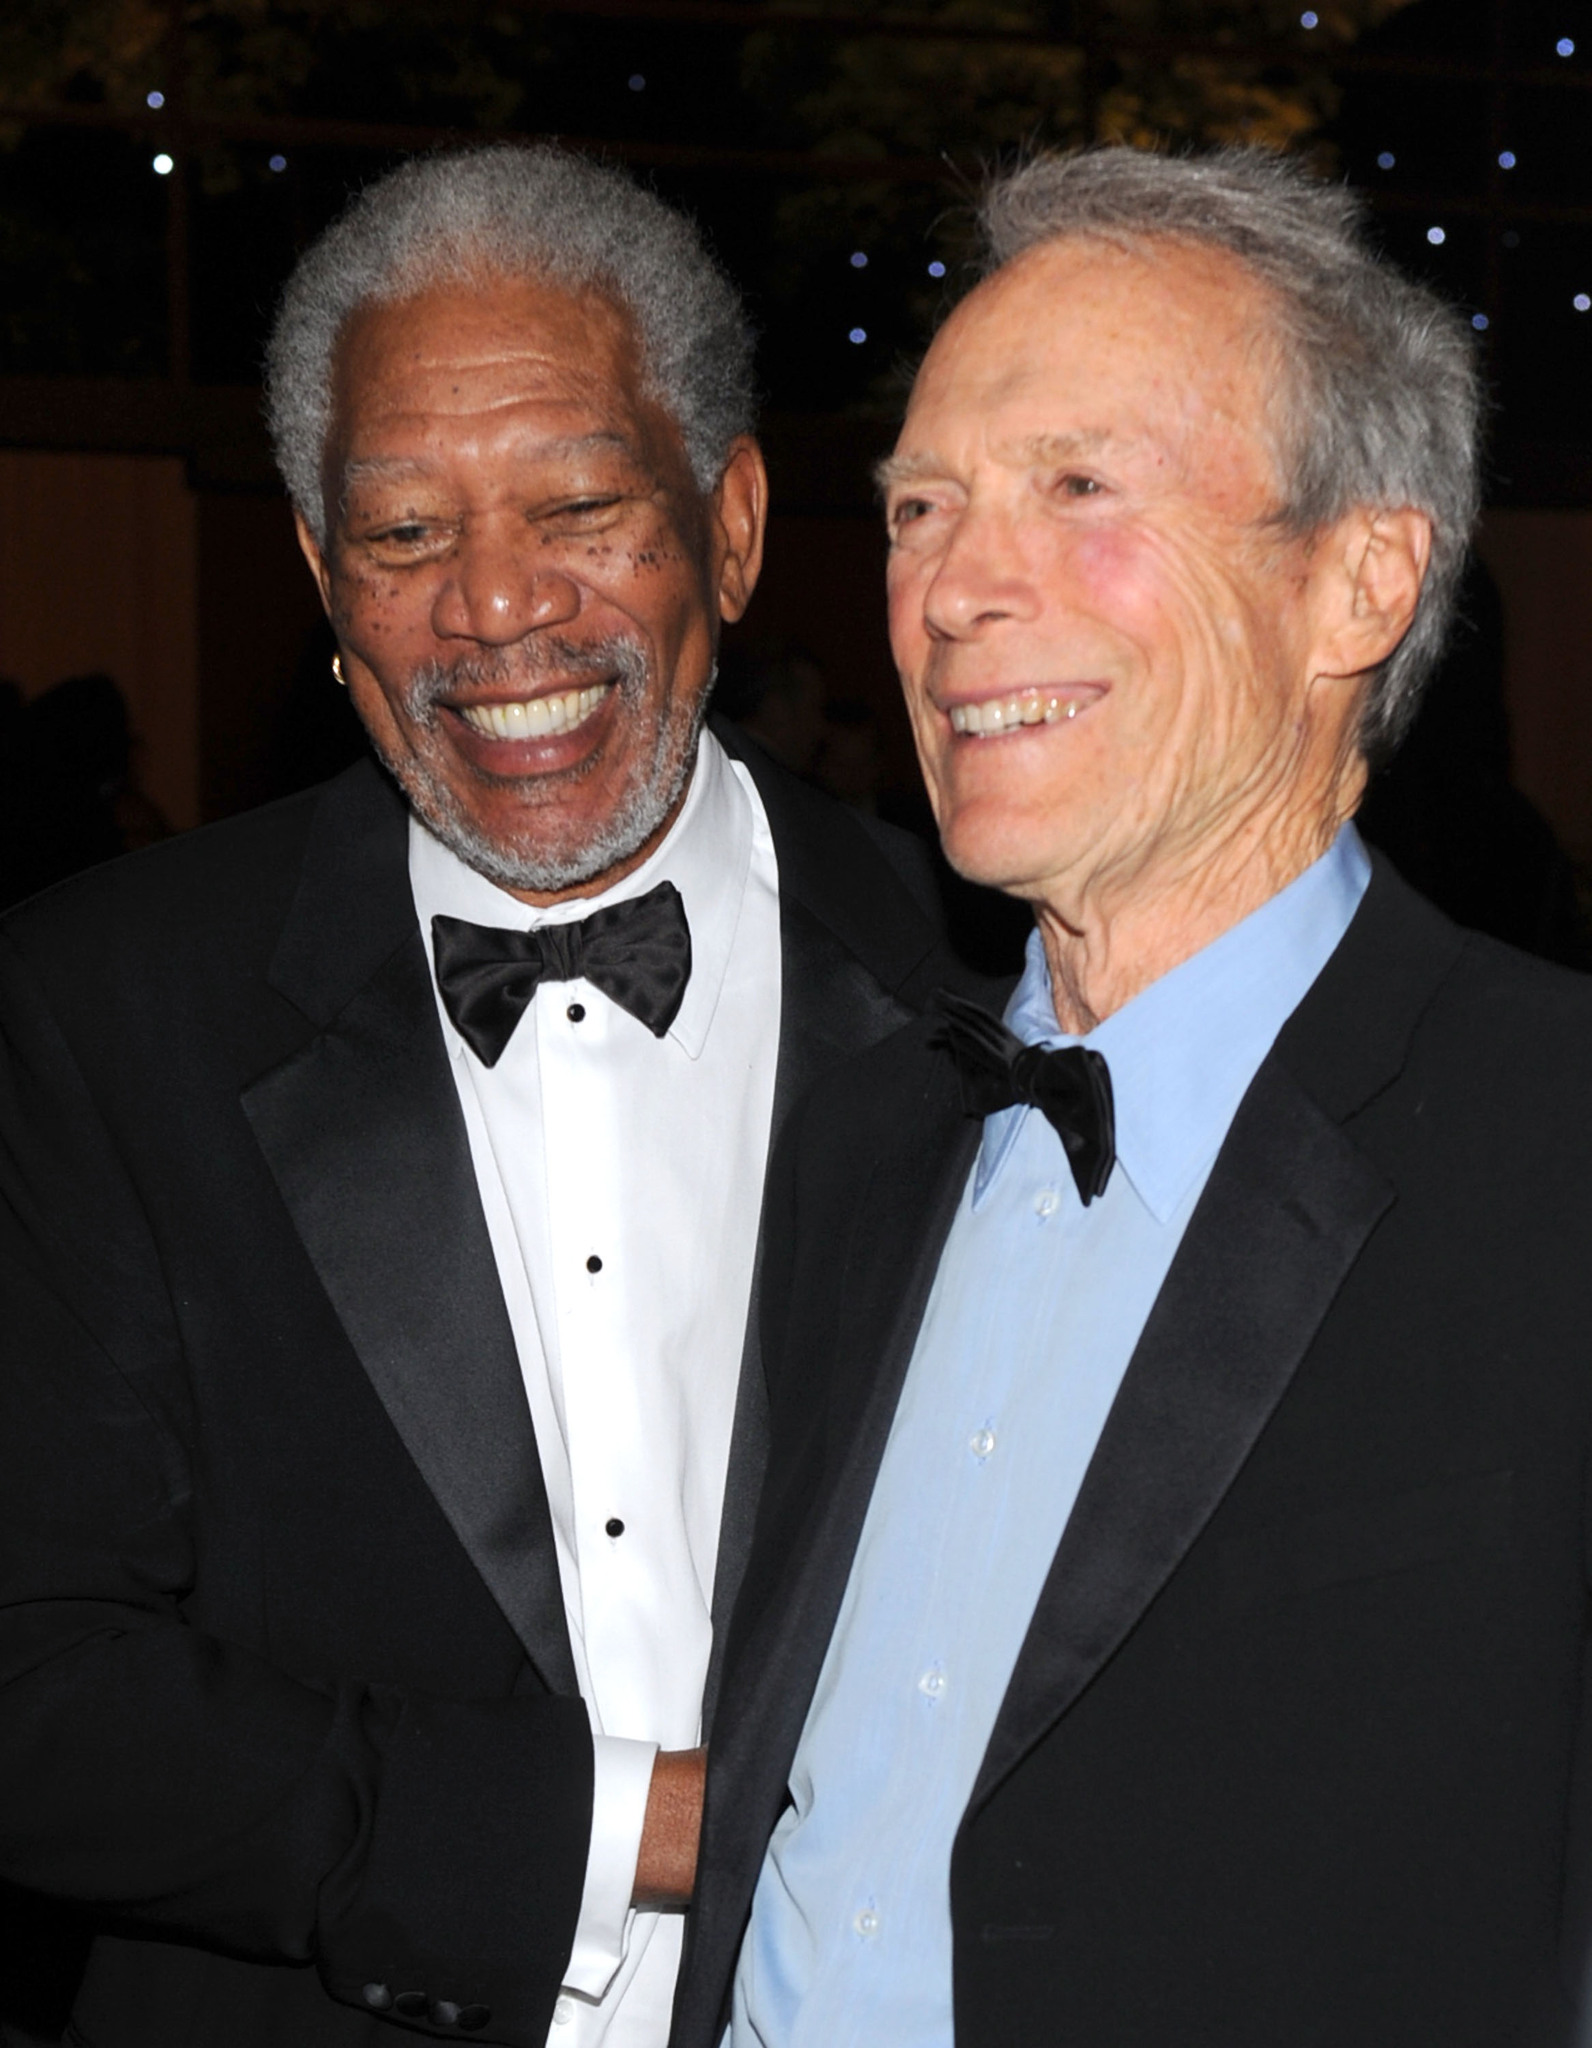 Clint Eastwood and Morgan Freeman